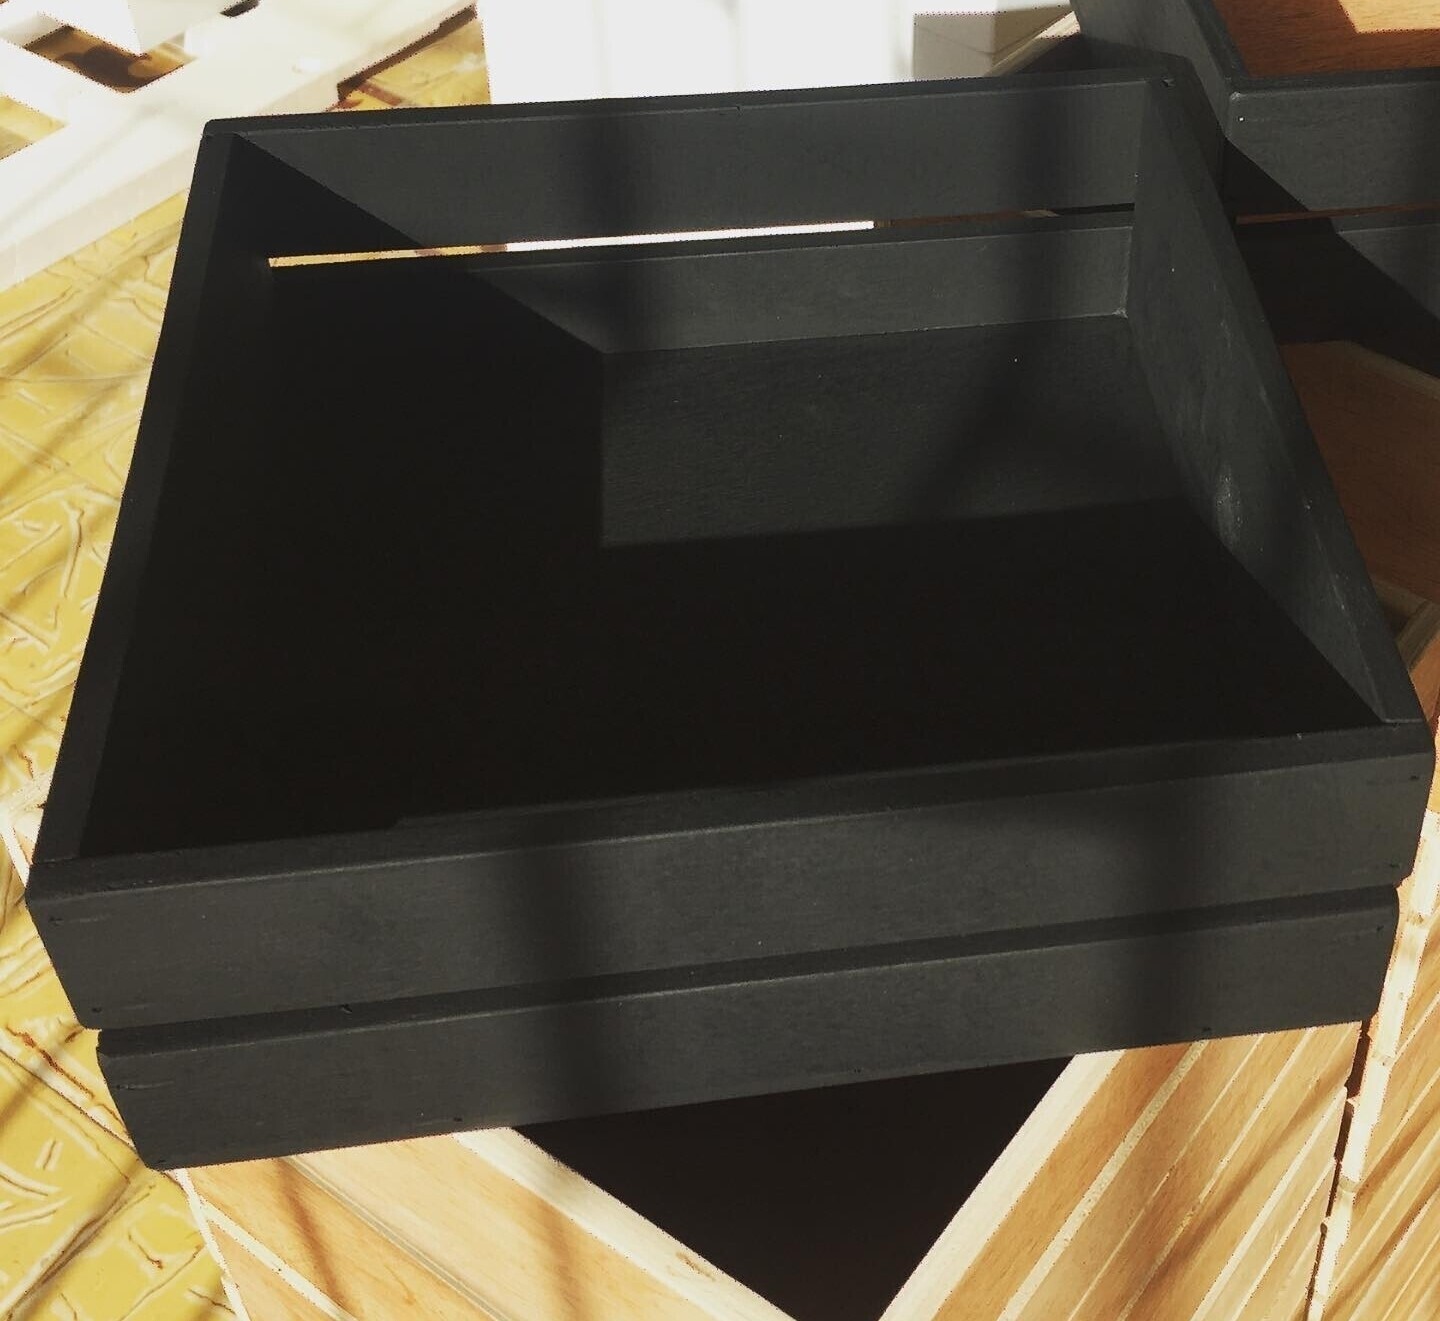 8.5x 8.5x3.5 inch black crate gift box